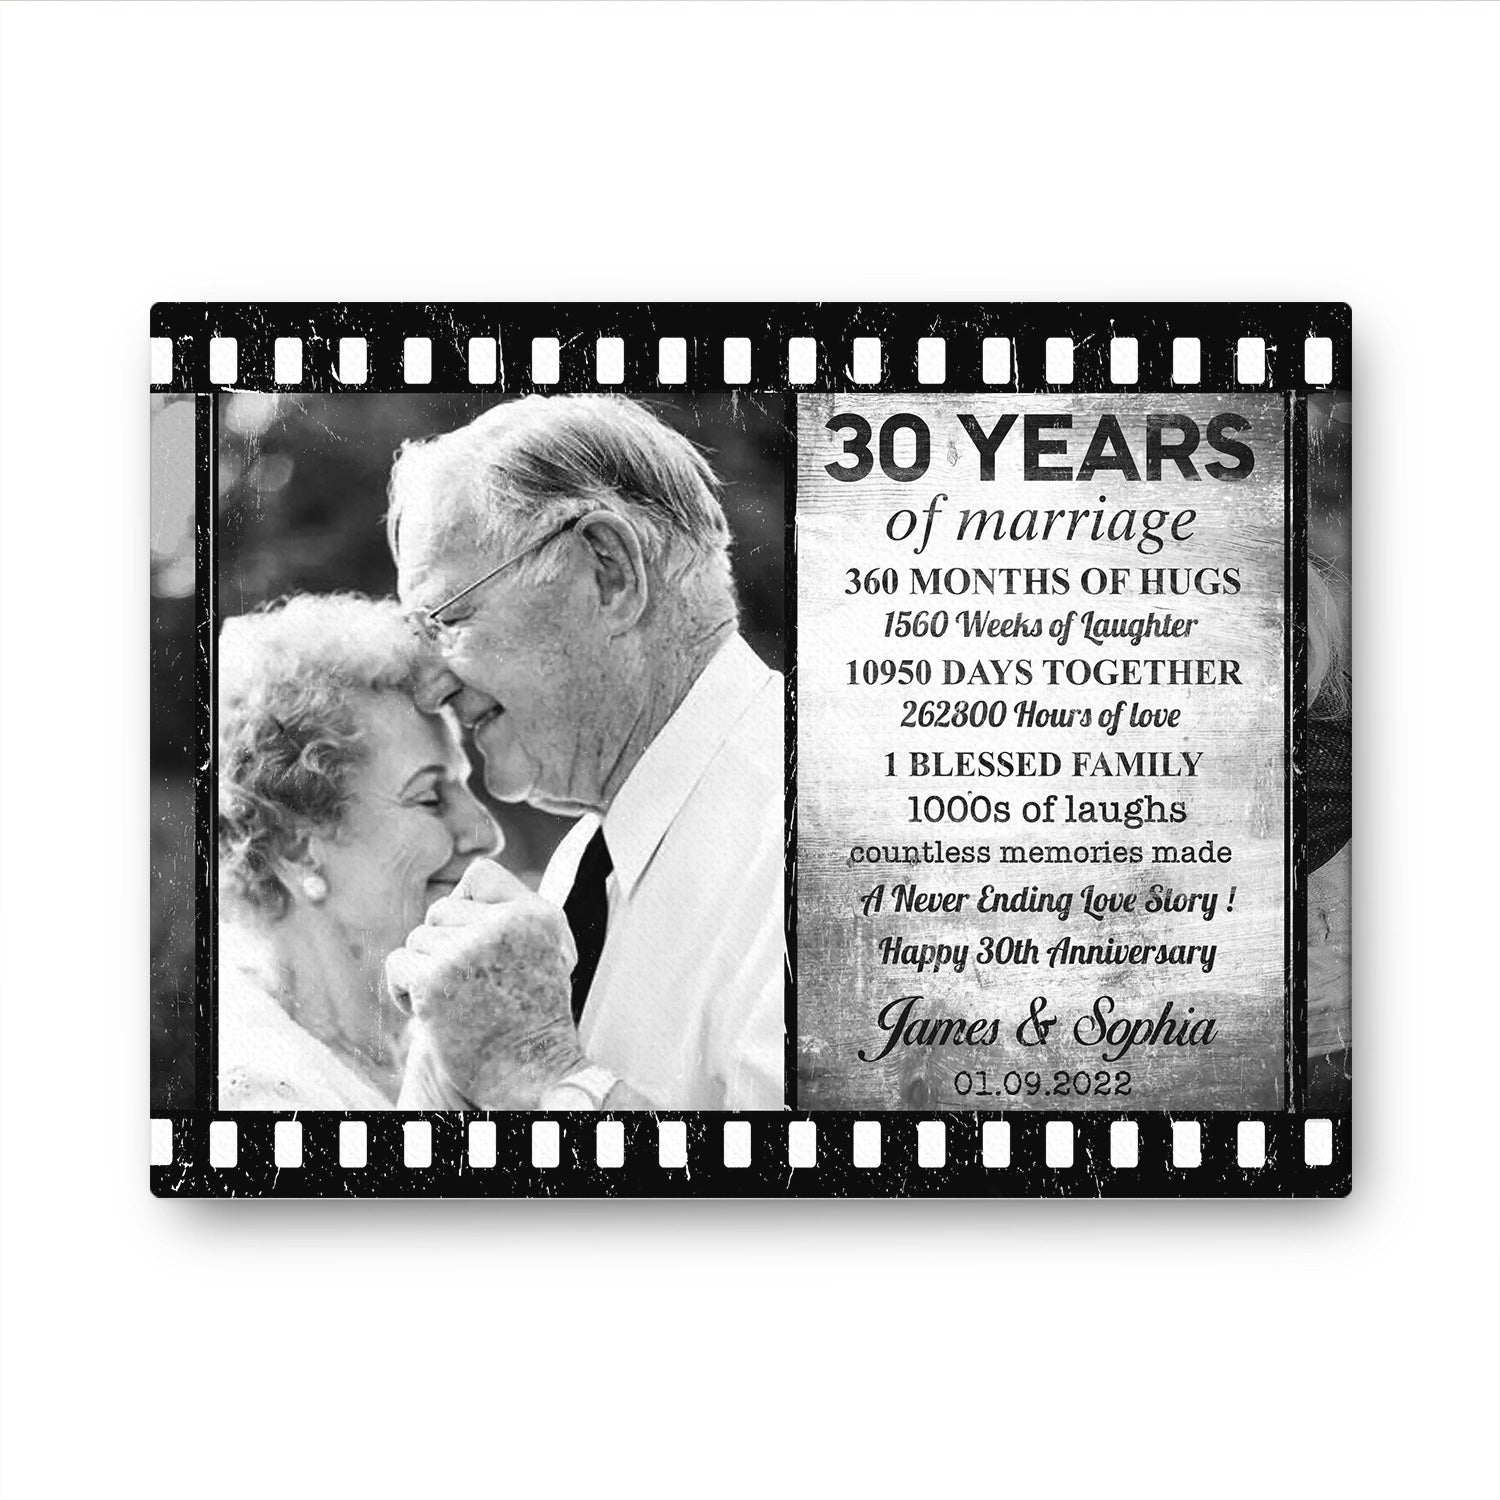 30 Years Of Marriage Film Custom Image Anniversary Canvas